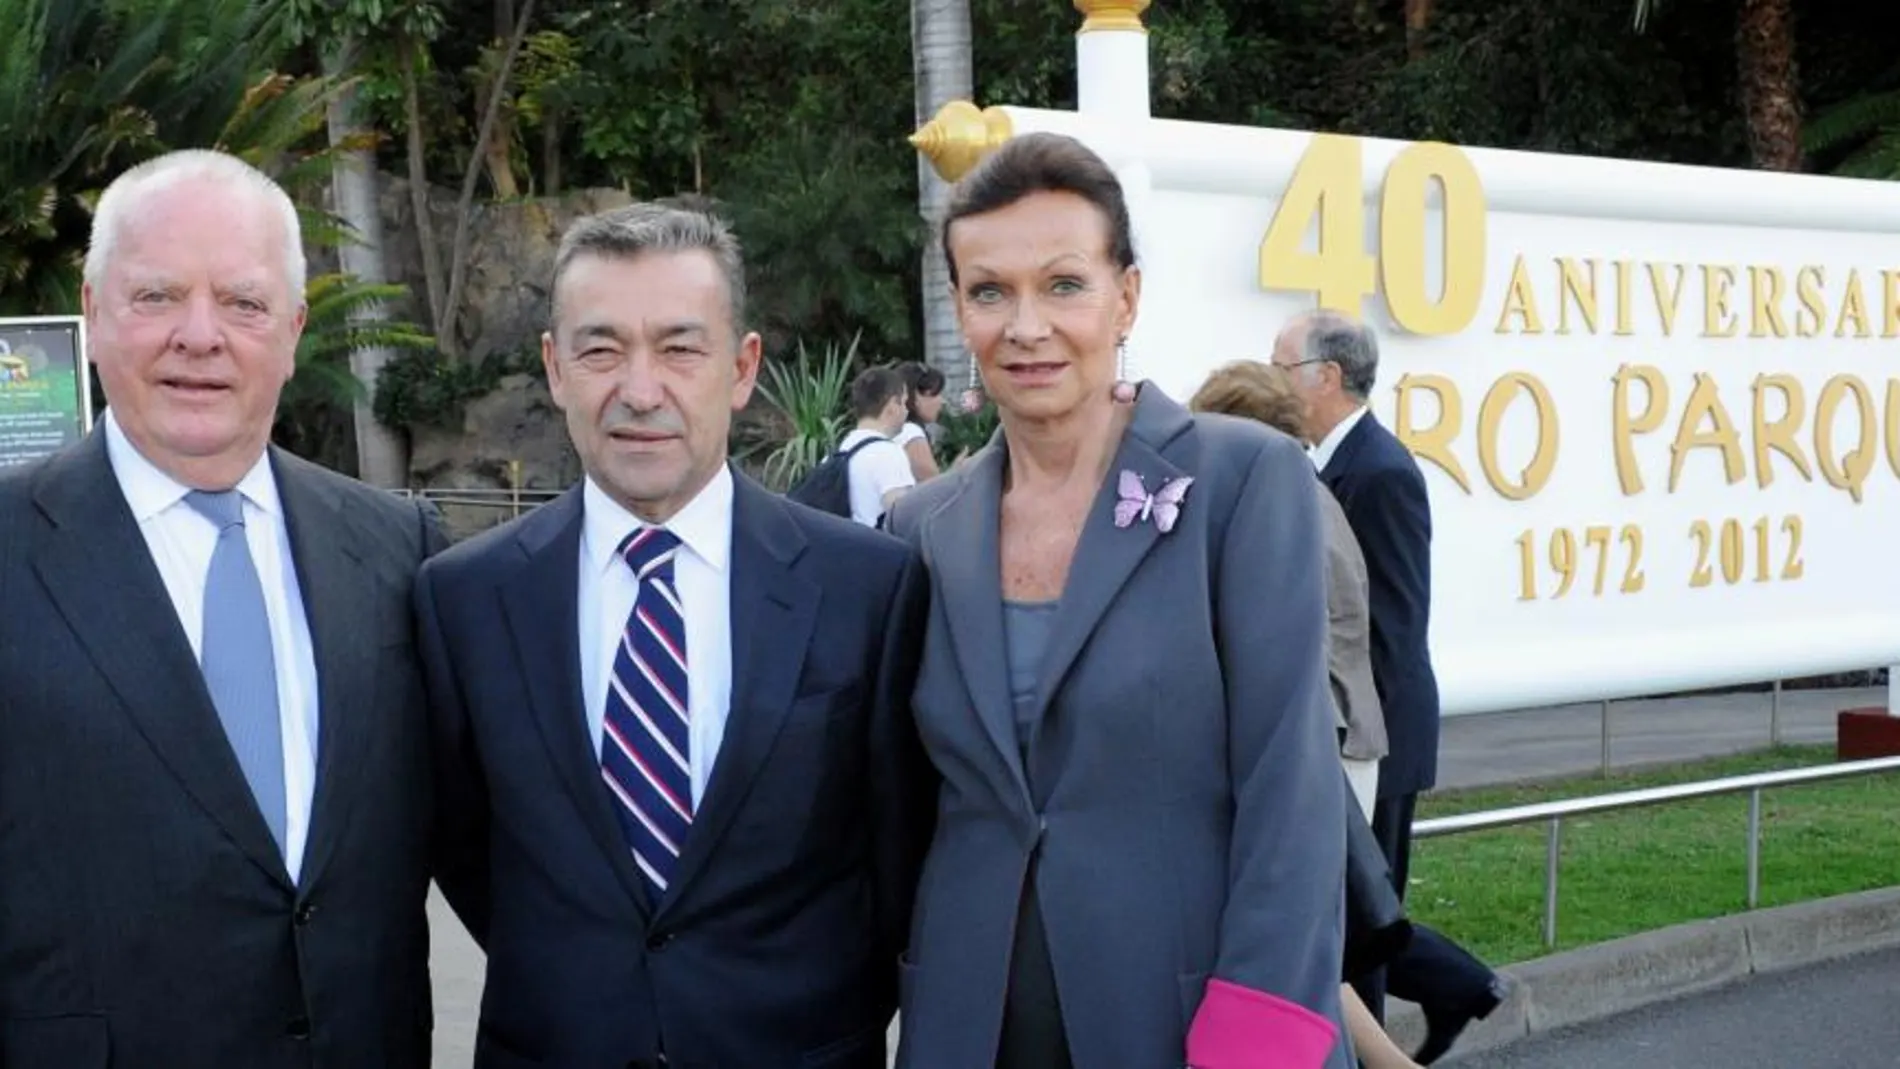 Wolfgang Kiessling, presidente de Loro Parque, Paulino Rivero, presidente de Canarias, y Brigitte Kiessling